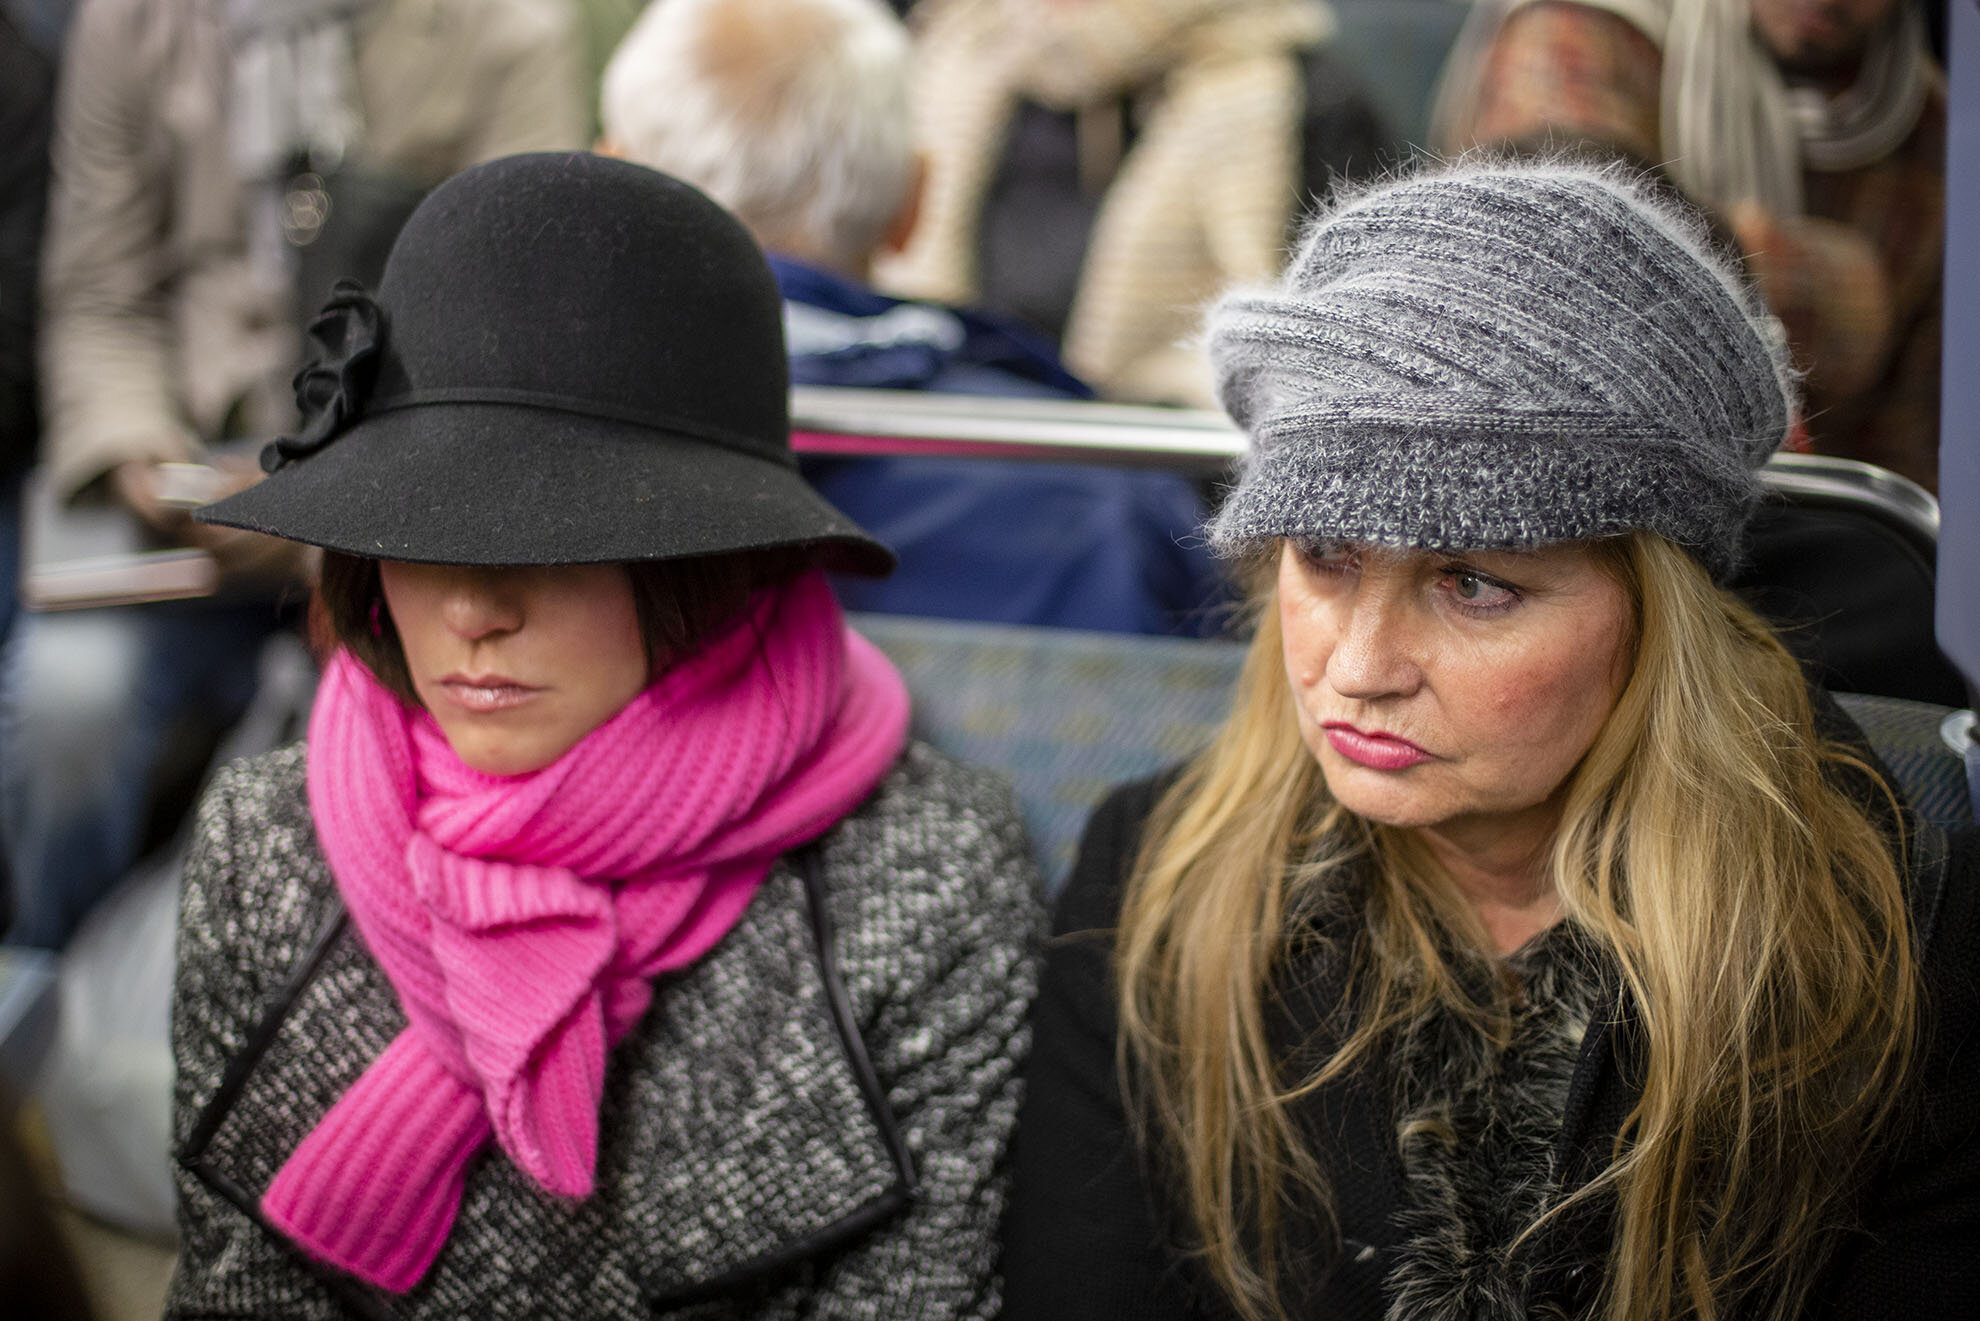  Train passengers, Paris 